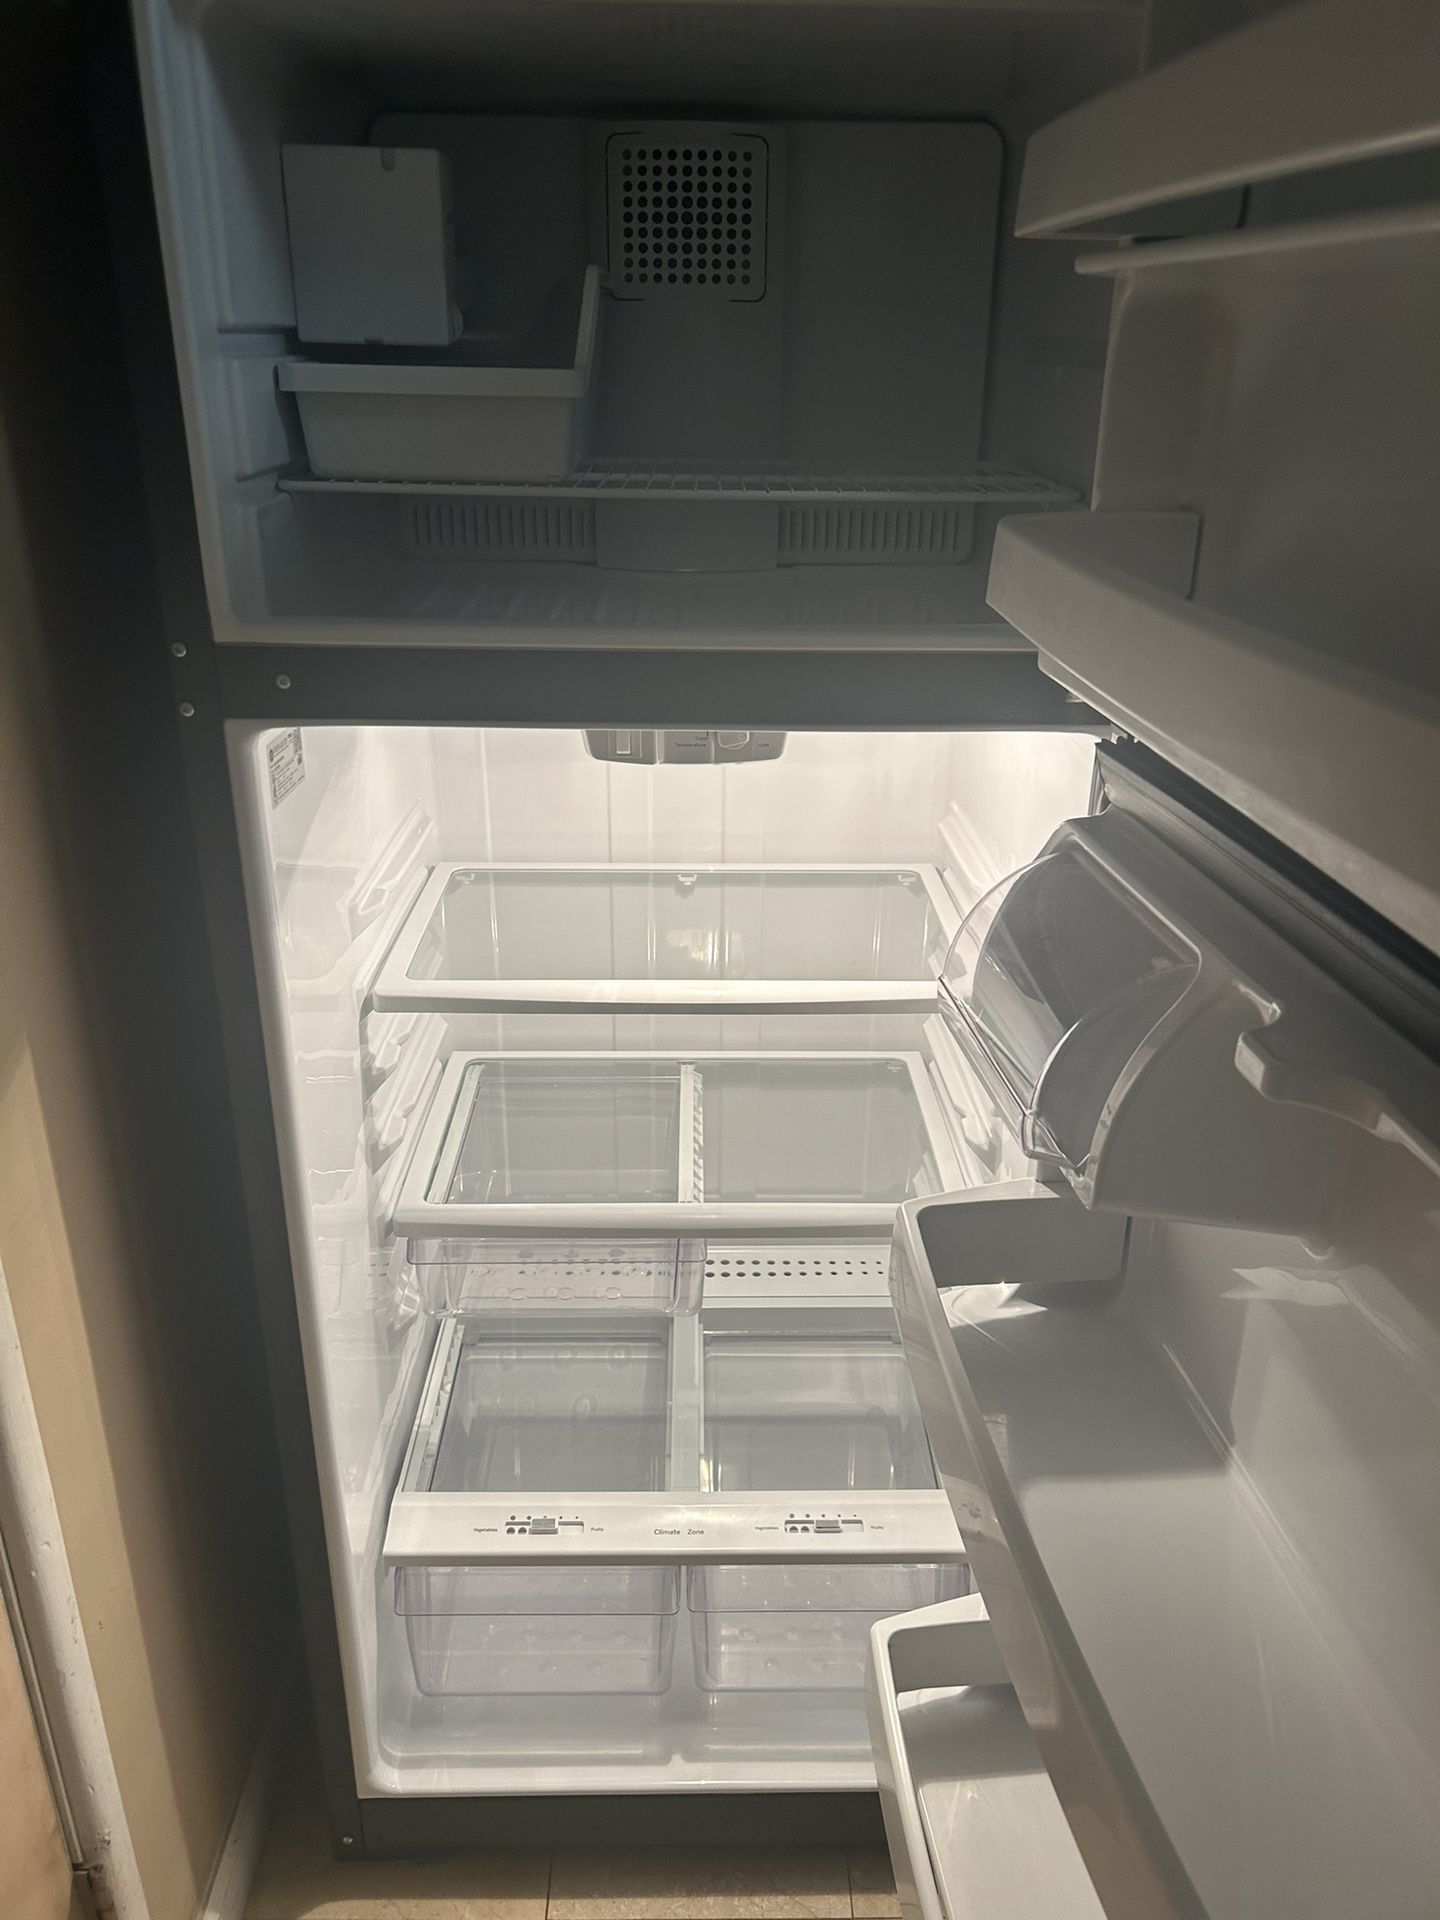 GE Energy Star 17.5 Cu. Ft. Top Freezer Refrigerator